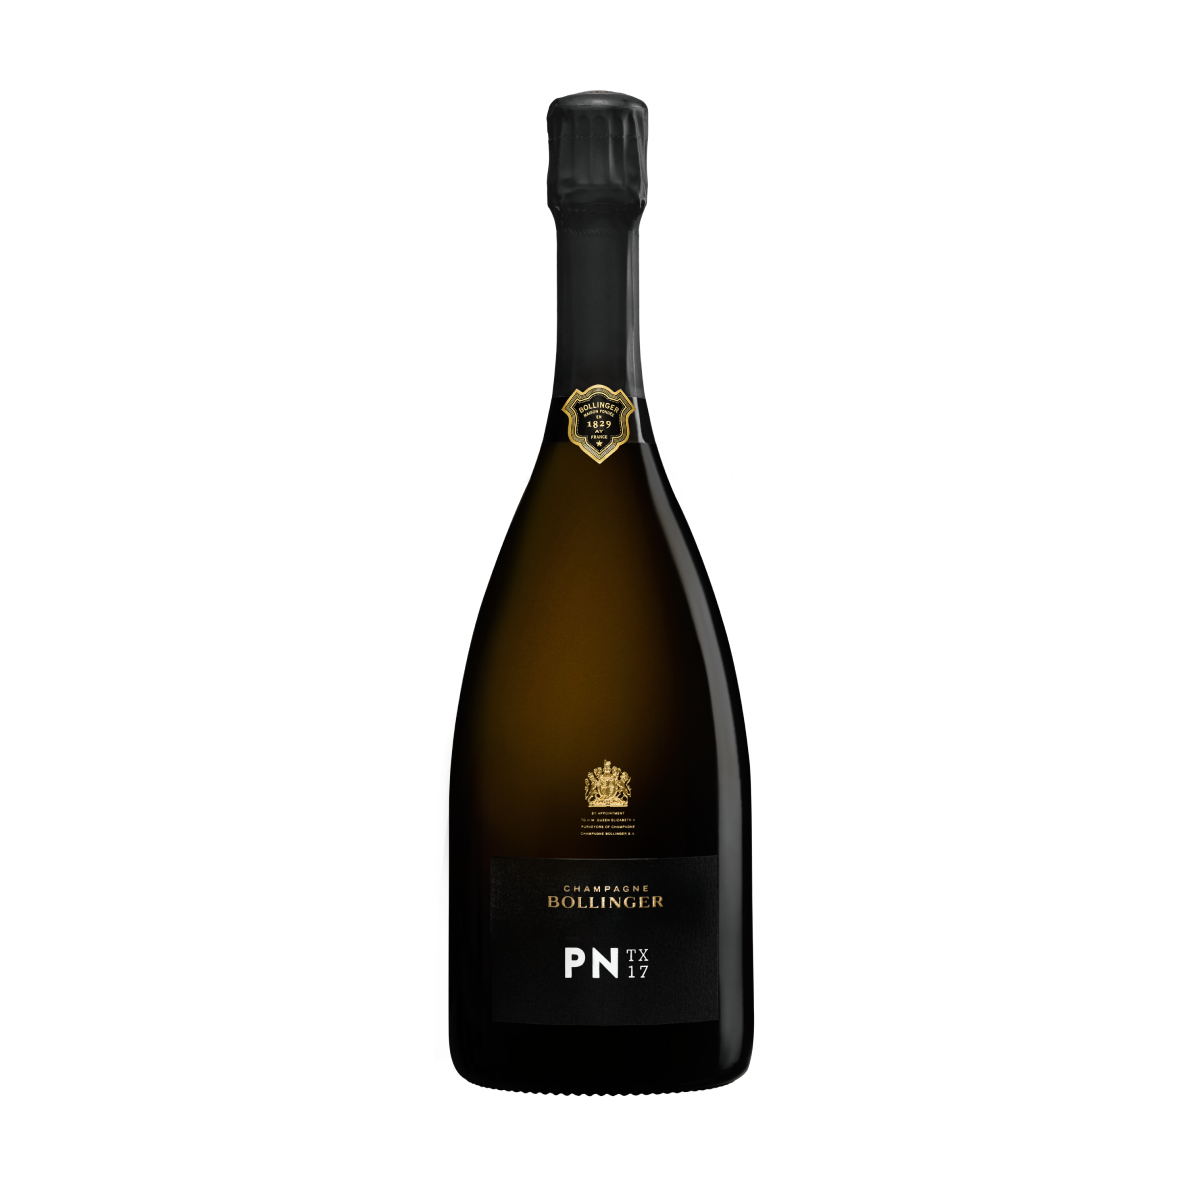 Bollinger PN TX17 Pinot Noir Champagne cl 75